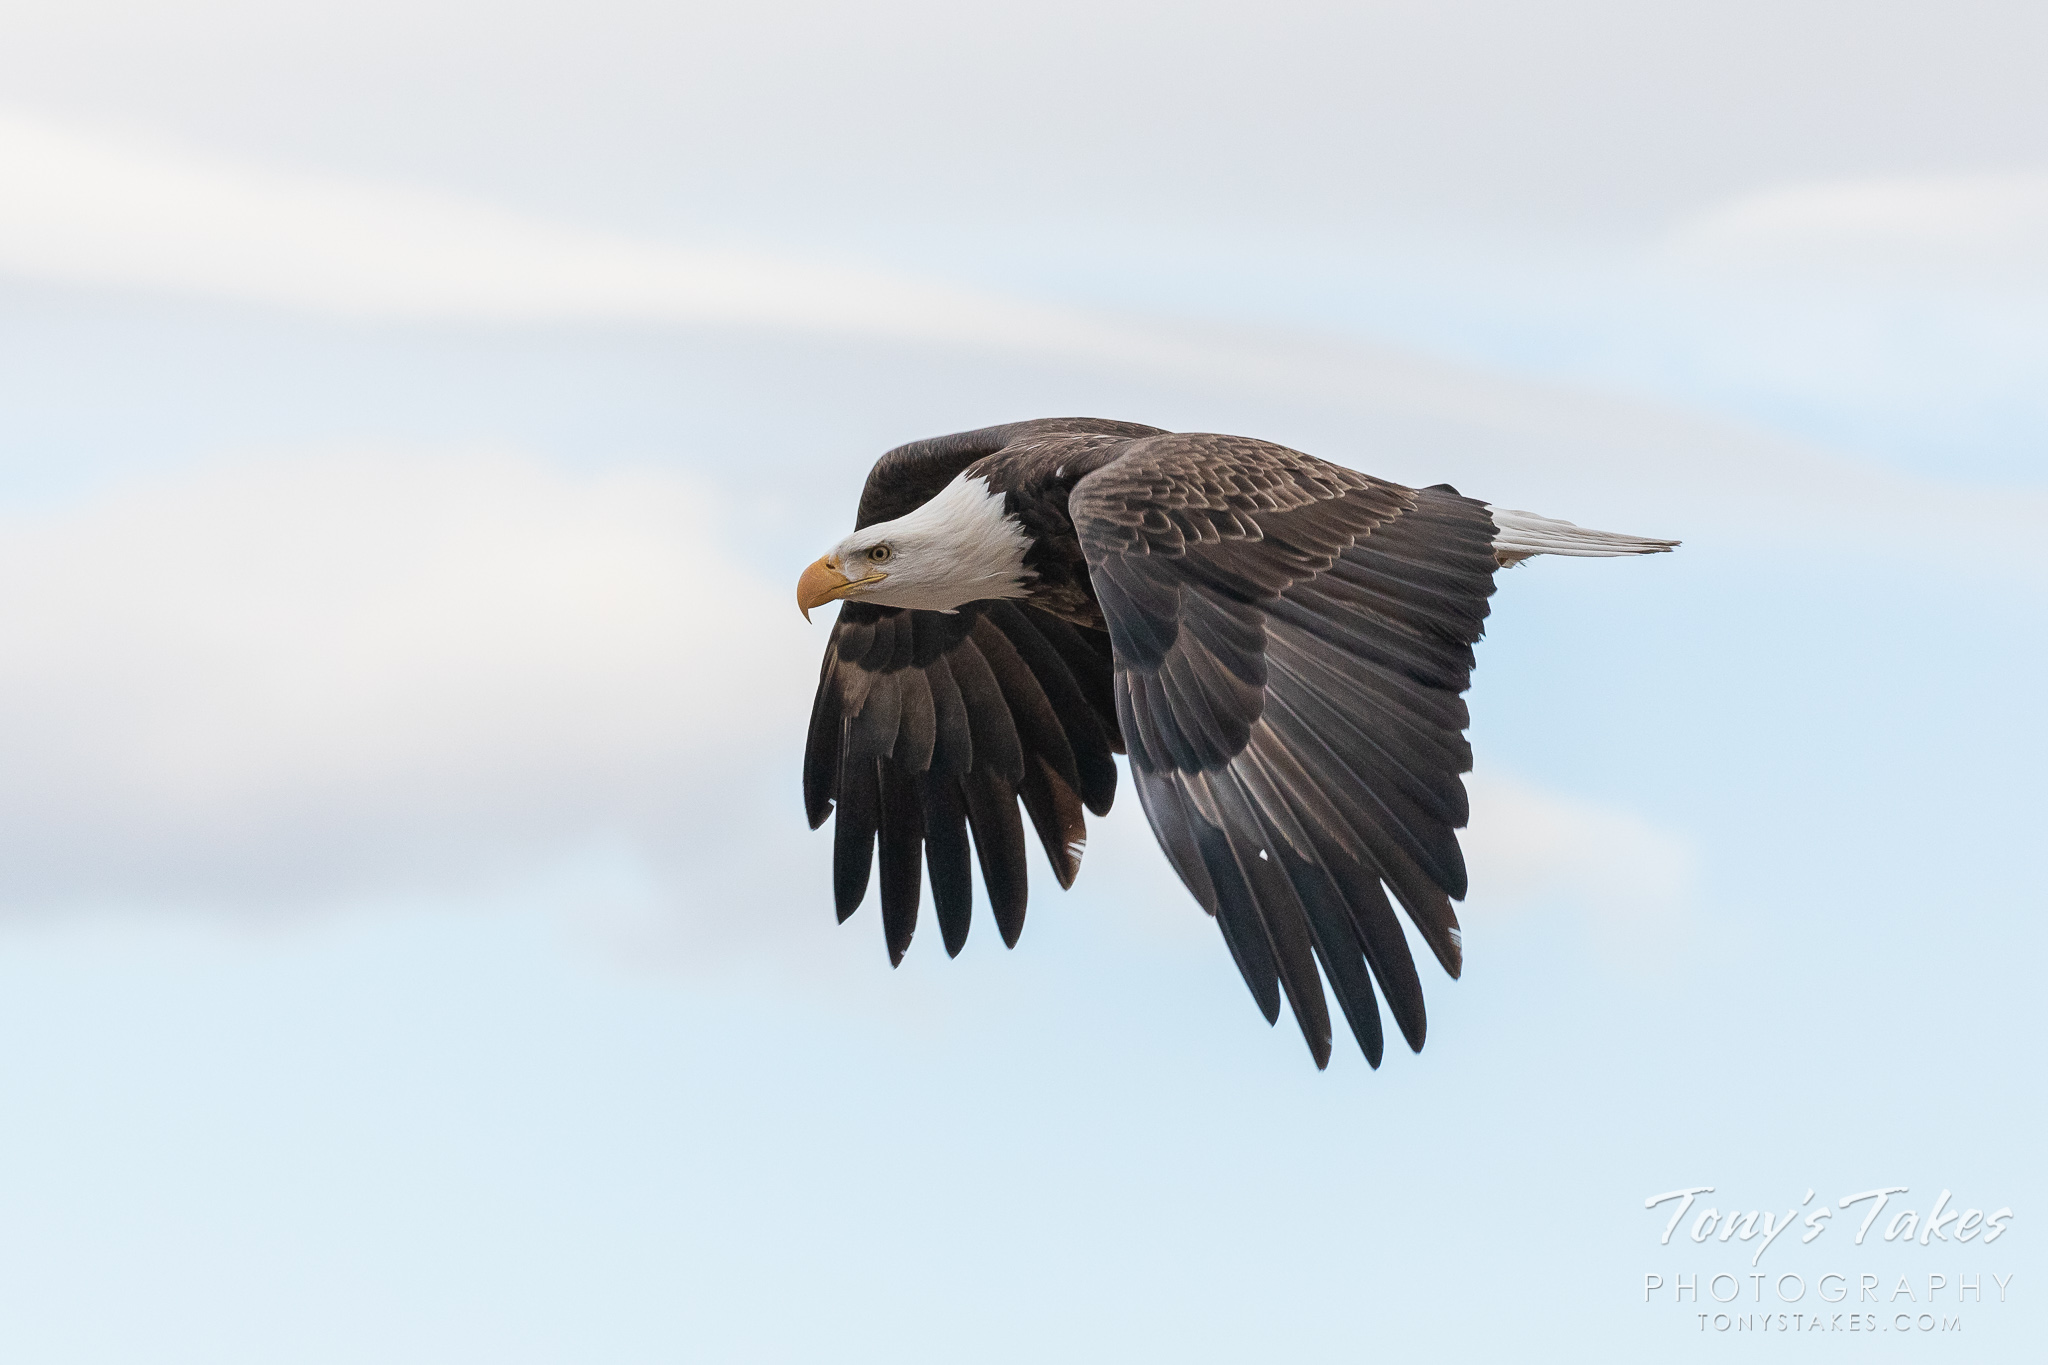 Beautiful bald eagle takes flight for Freedom Friday